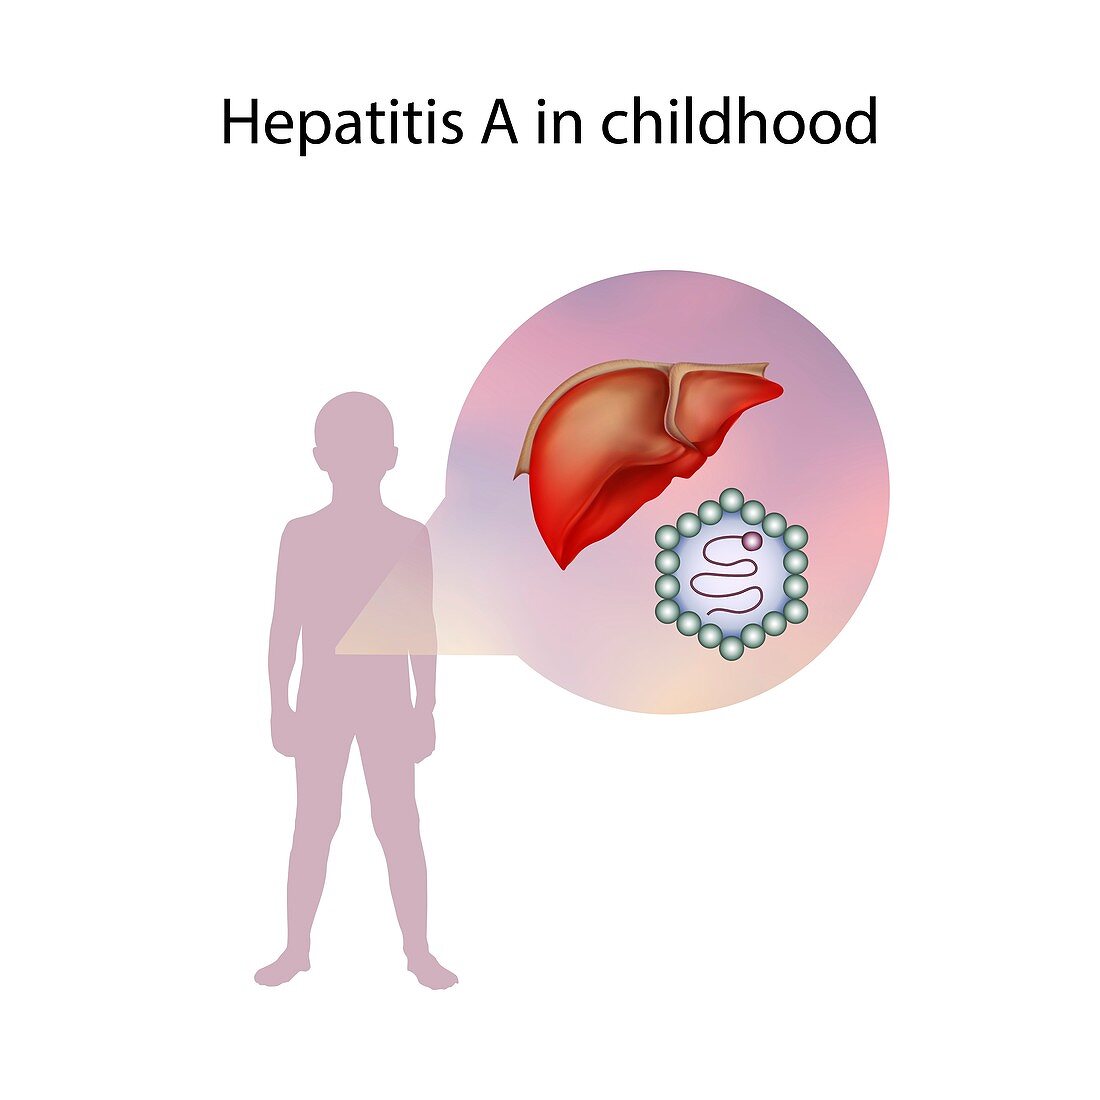 Hepatitis A in childhood,illustration